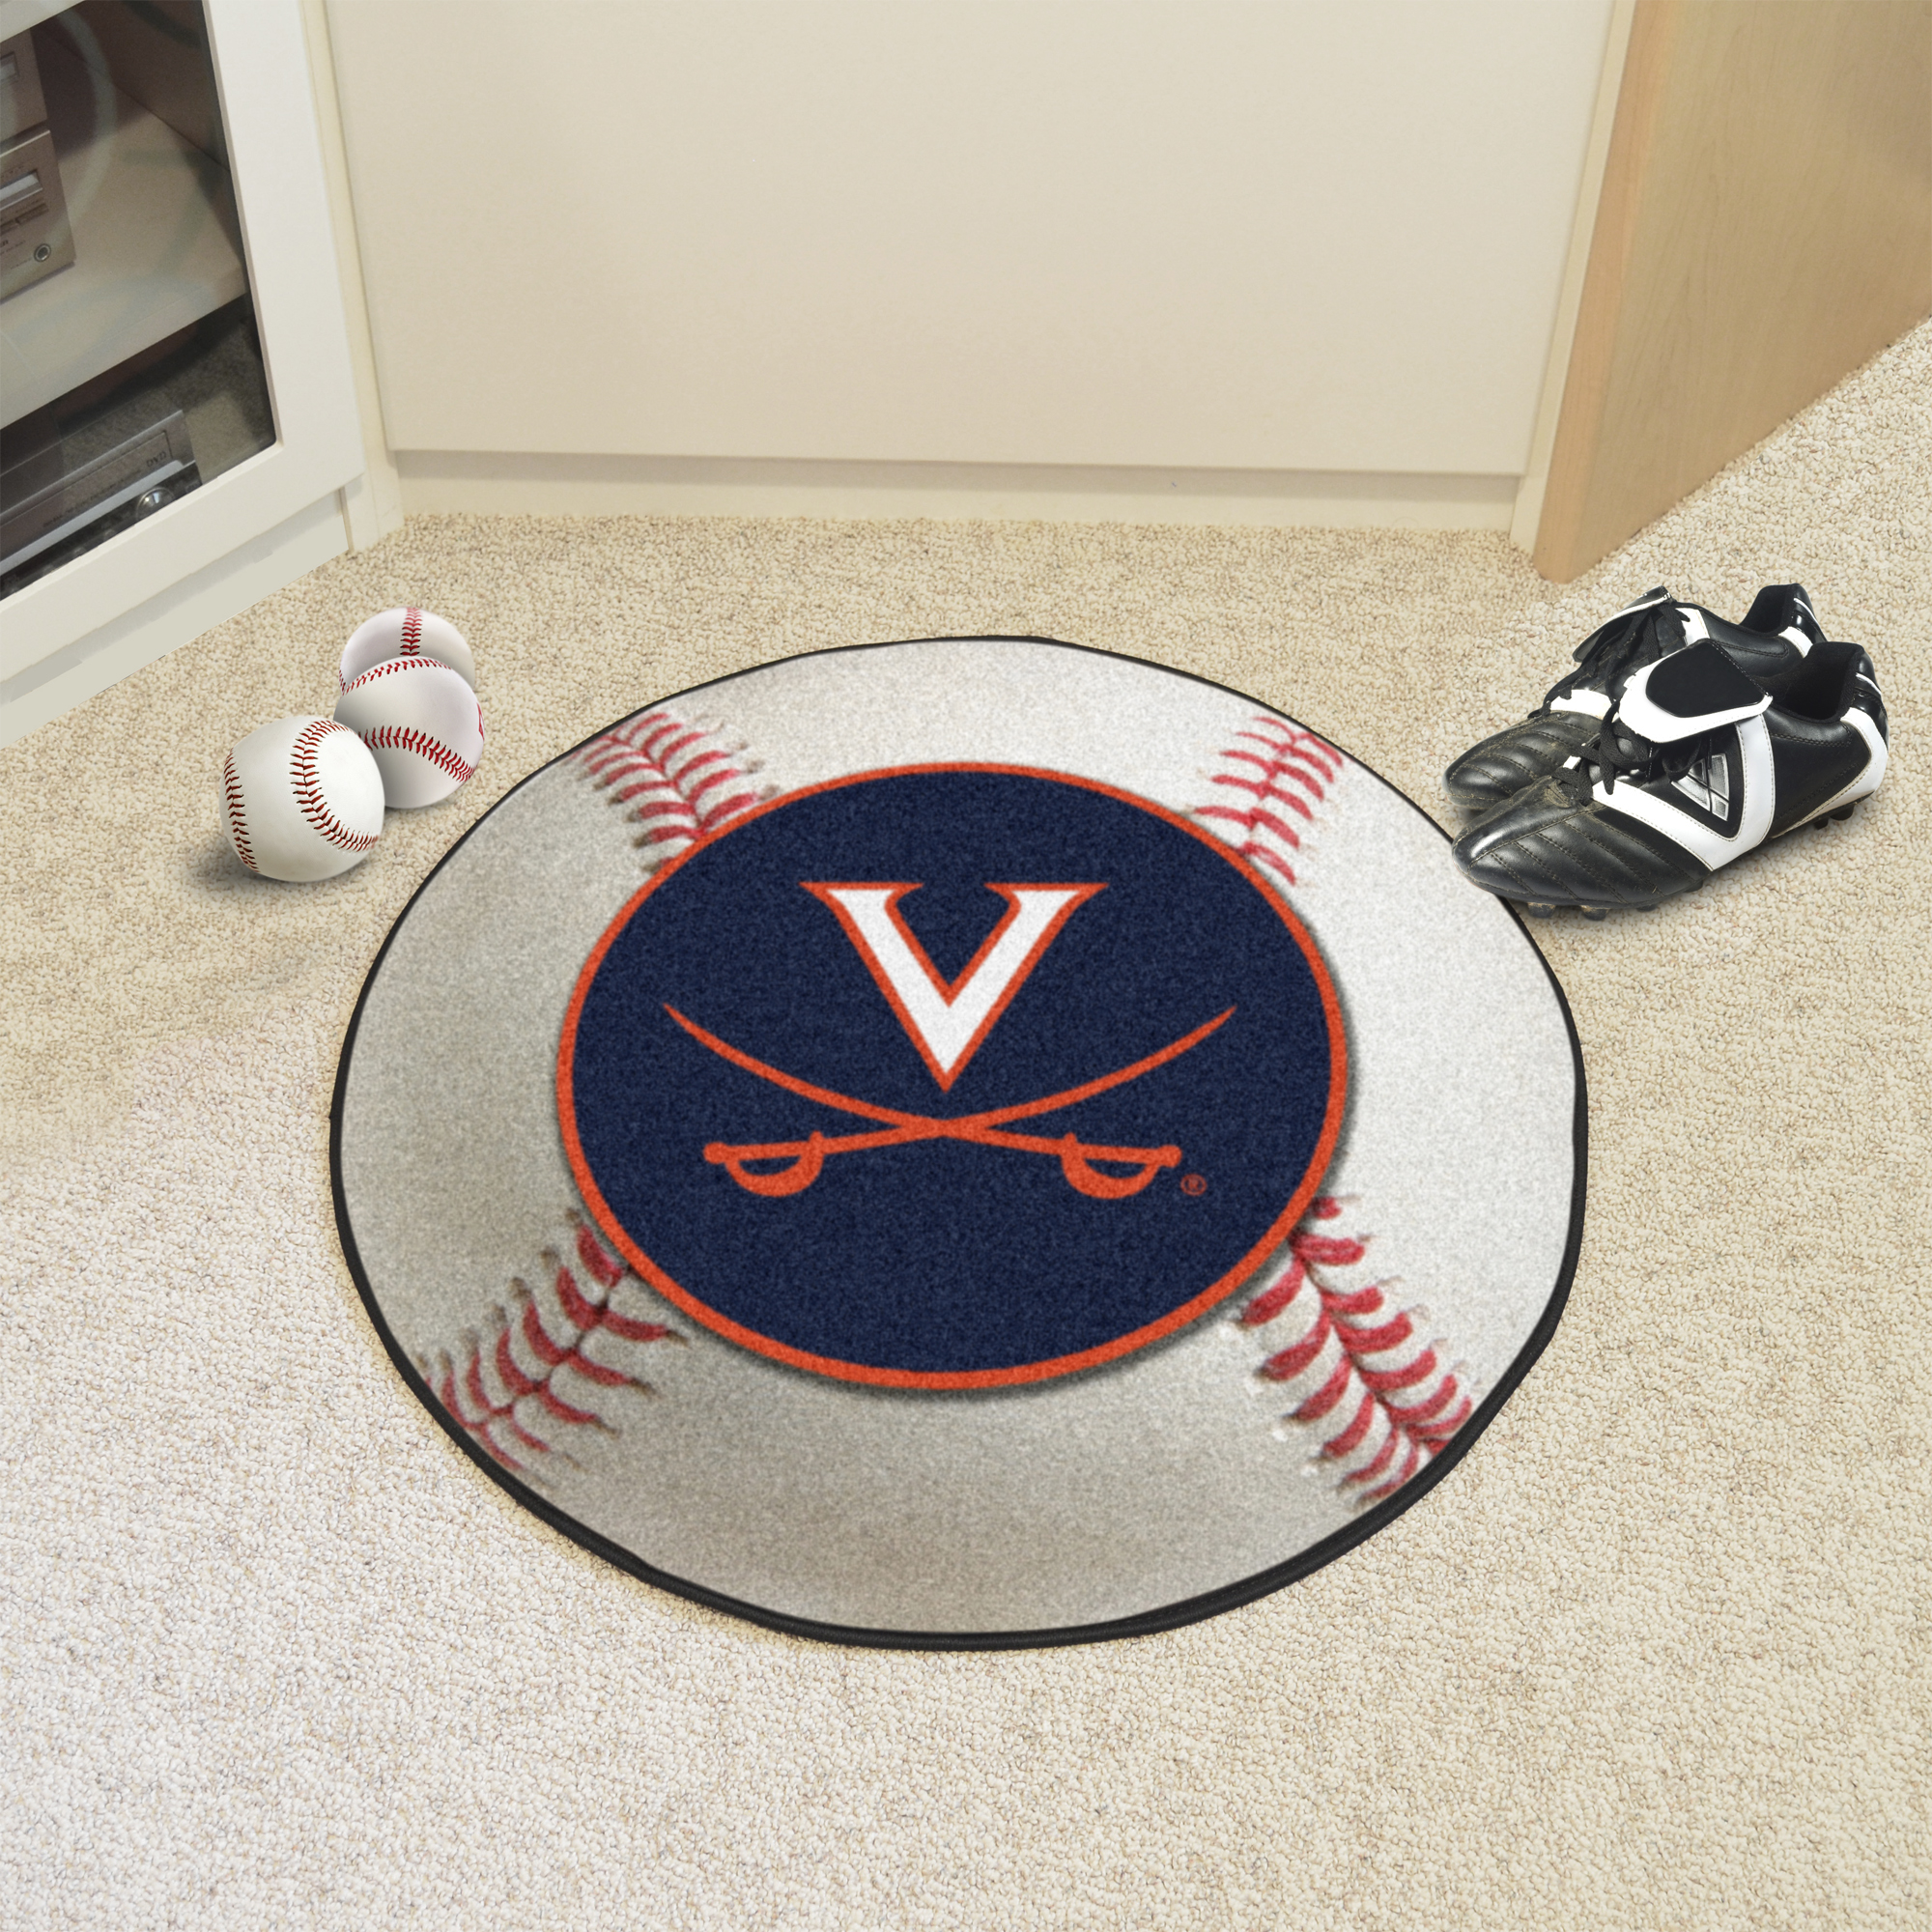 University of Virginia Ball Shaped Area Rugs (Ball Shaped Area Rugs: Baseball)